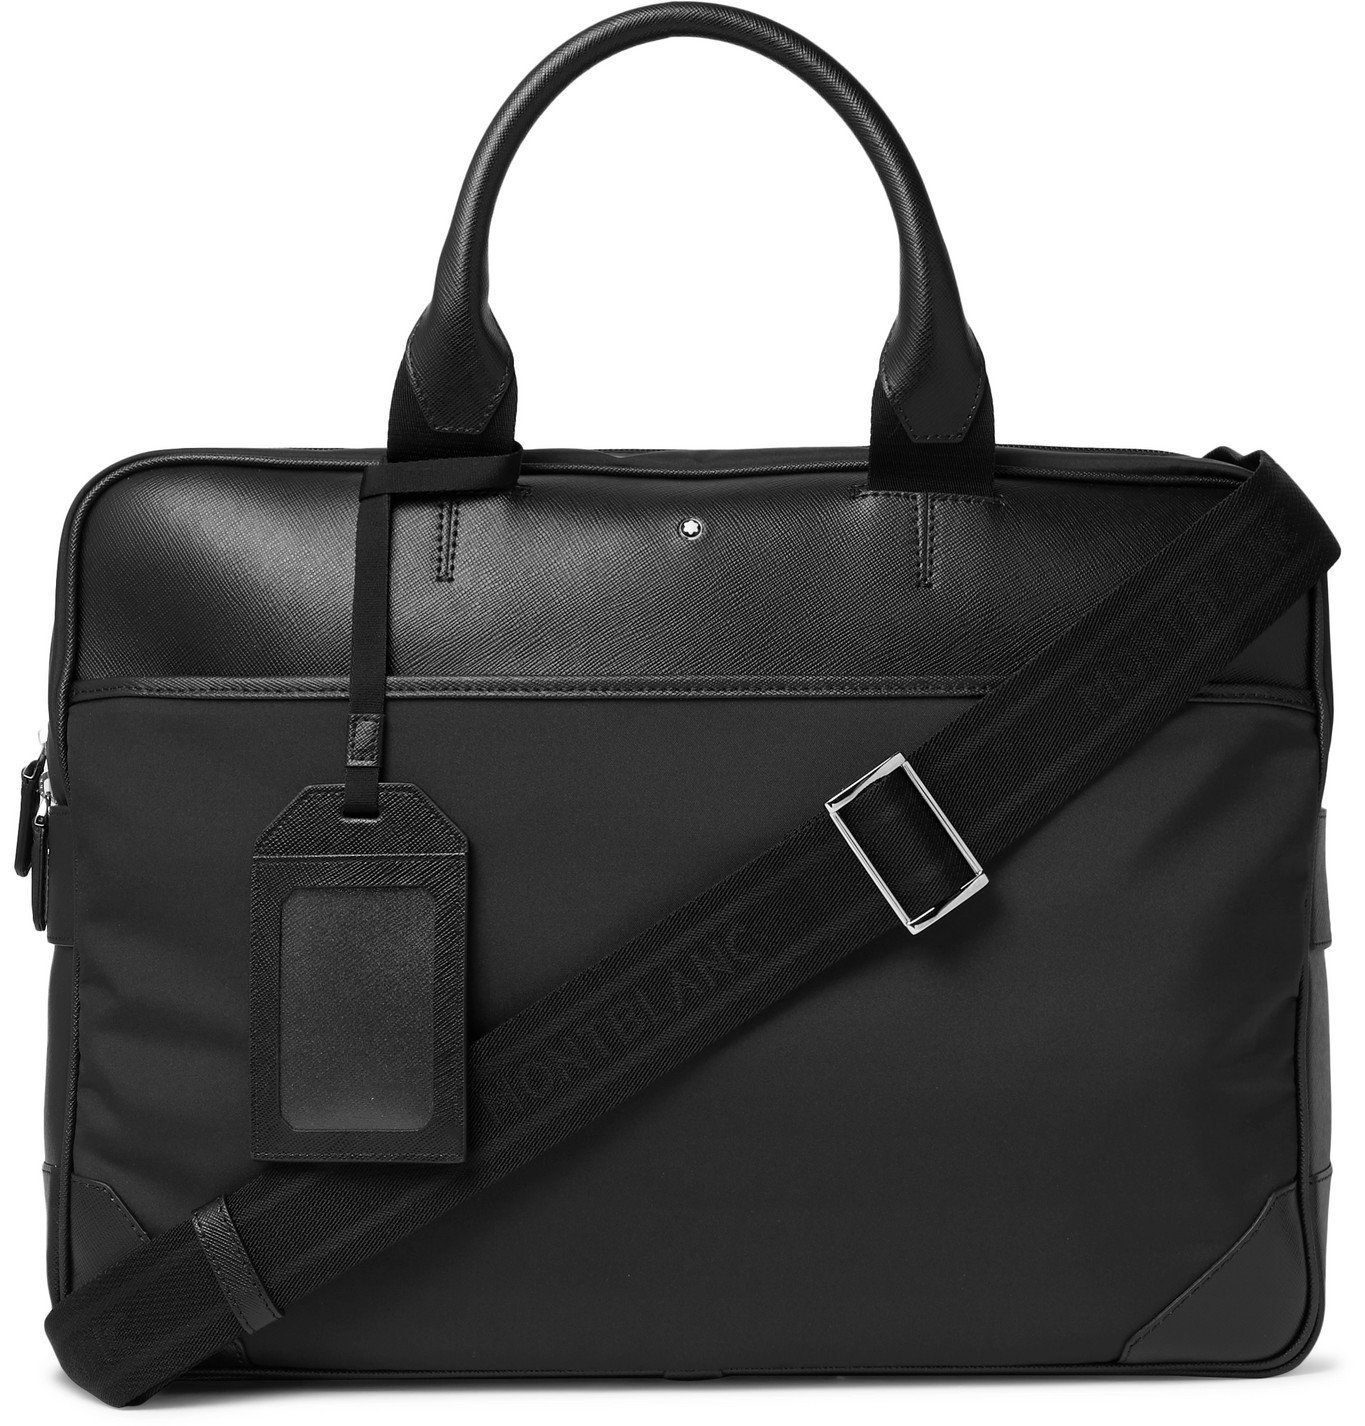 Montblanc - Full-Grain Leather Briefcase - Black Montblanc